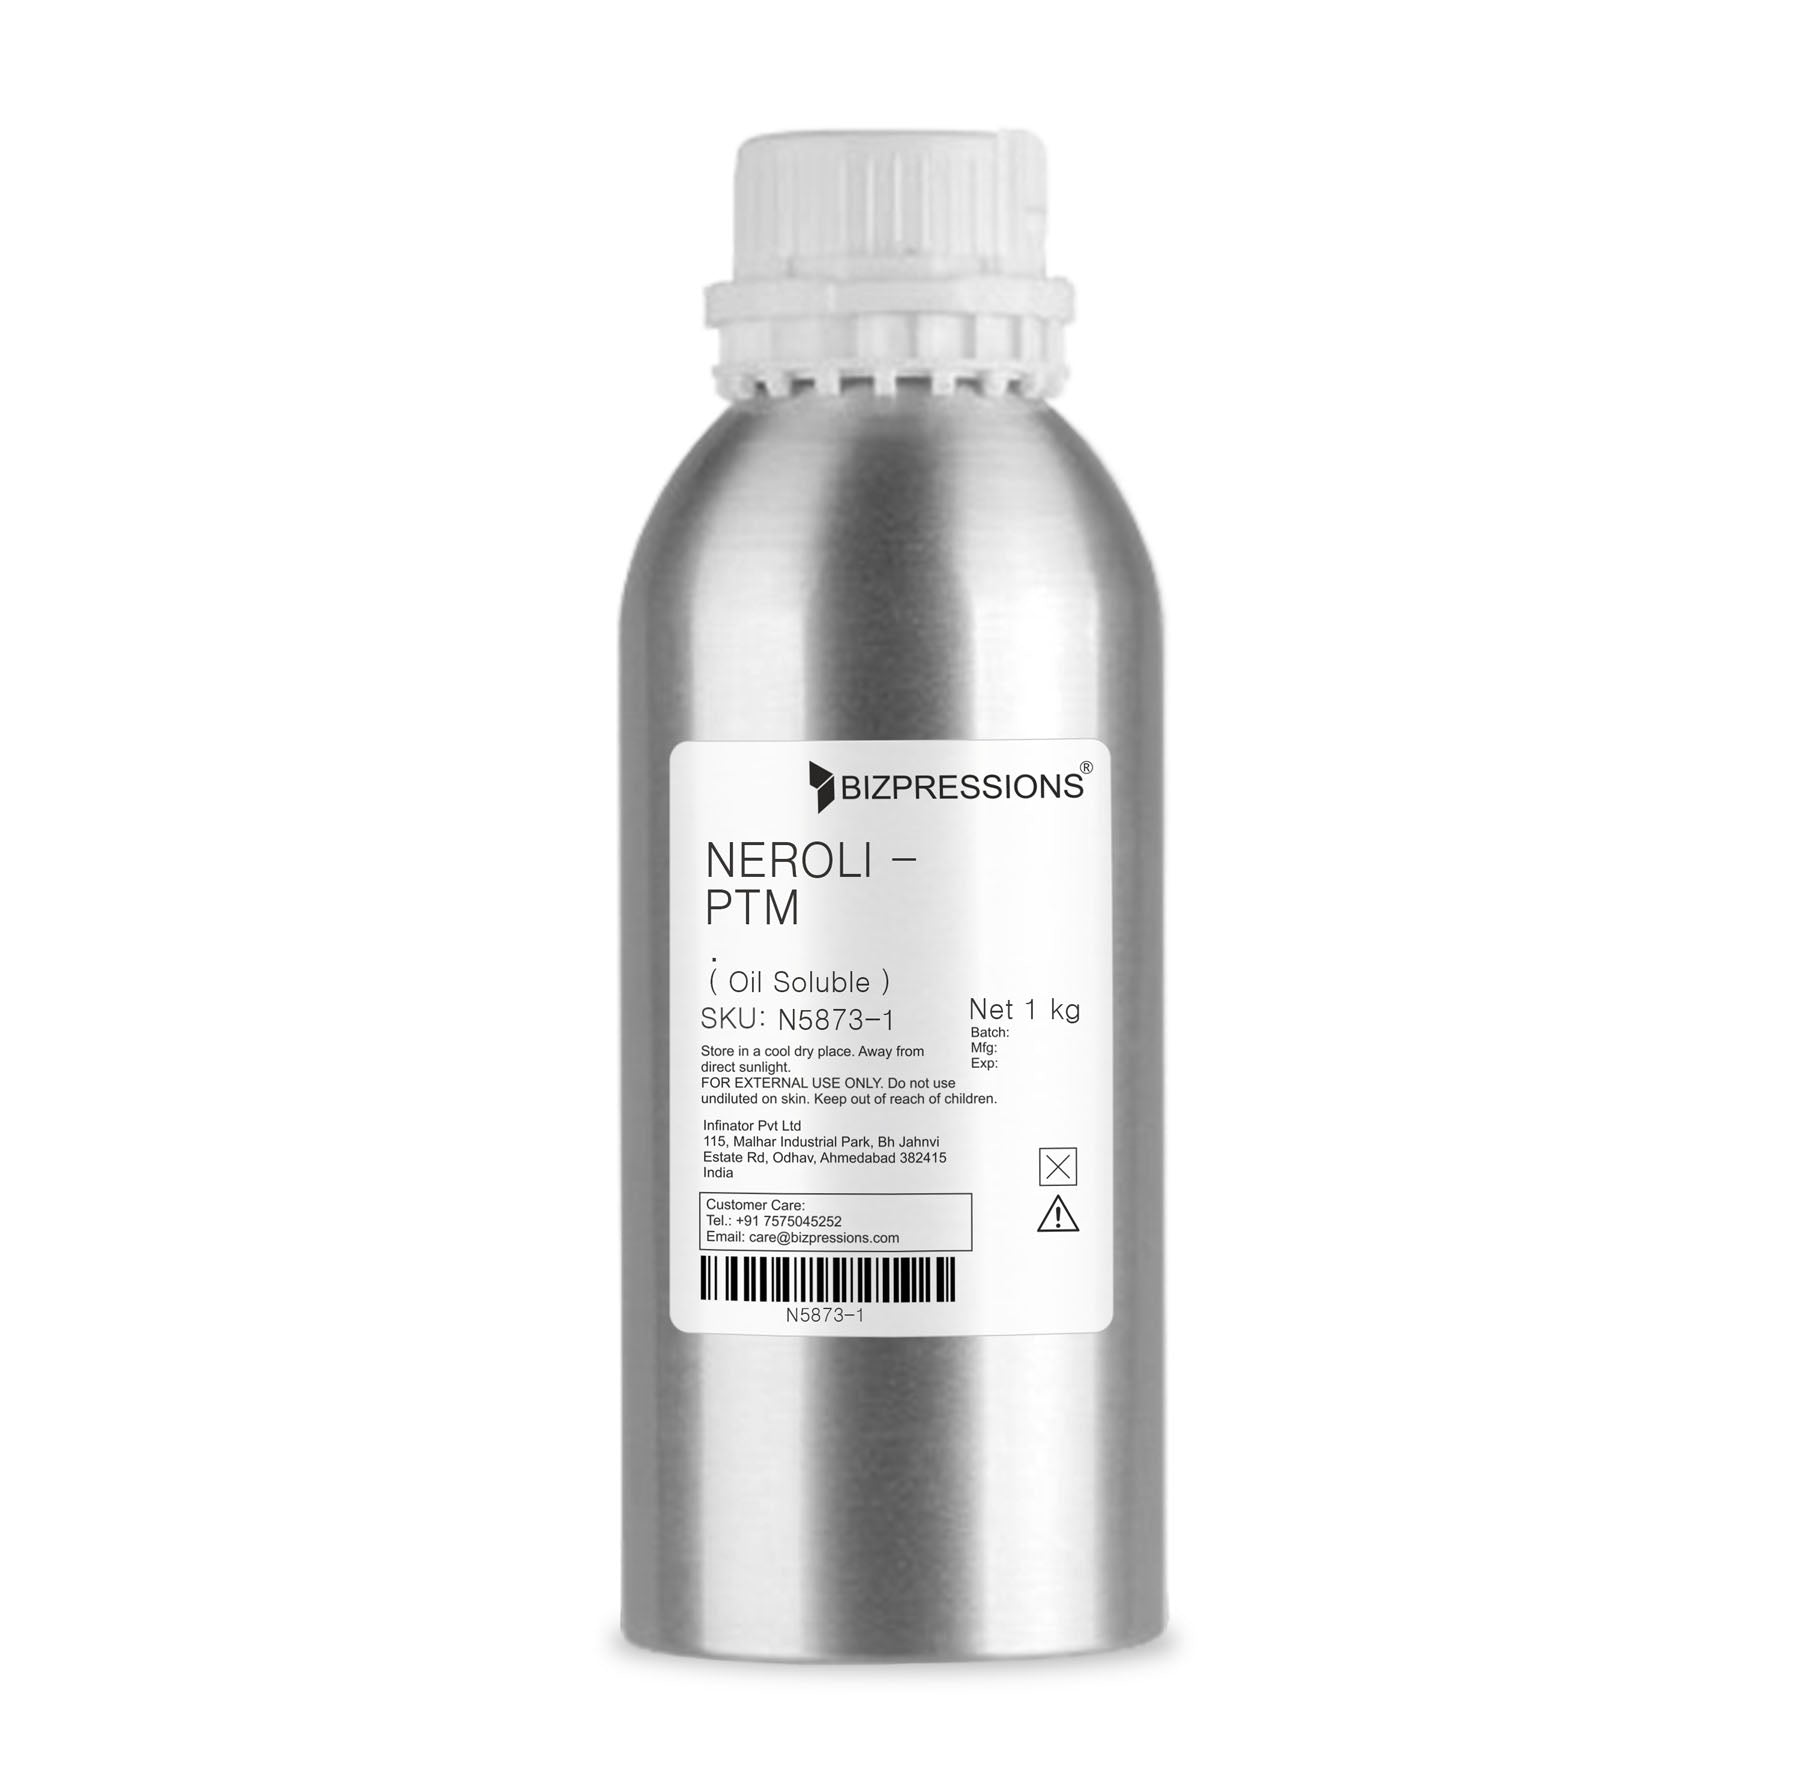 NEROLI - PTM - Fragrance ( Oil Soluble ) - 1 kg